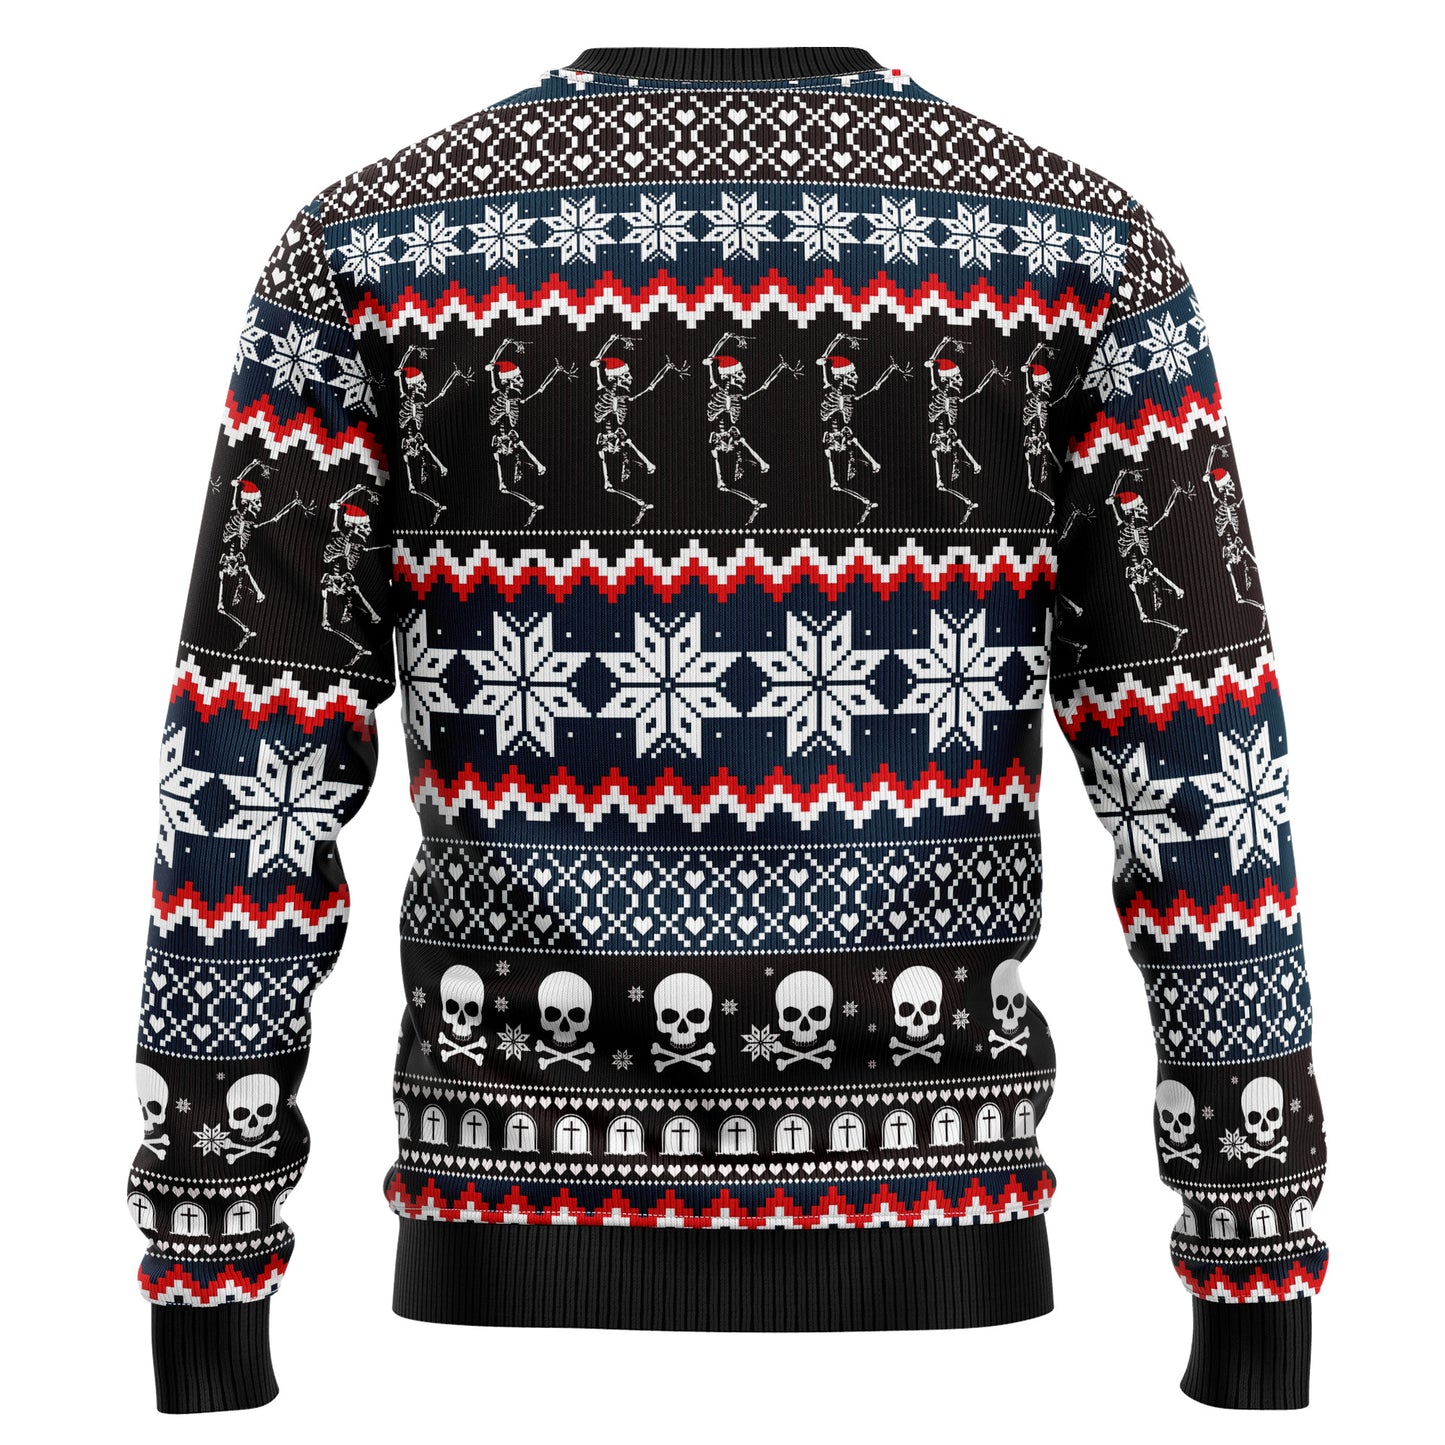 Skeleton Merry Creepmas TY510 Ugly Christmas Sweater